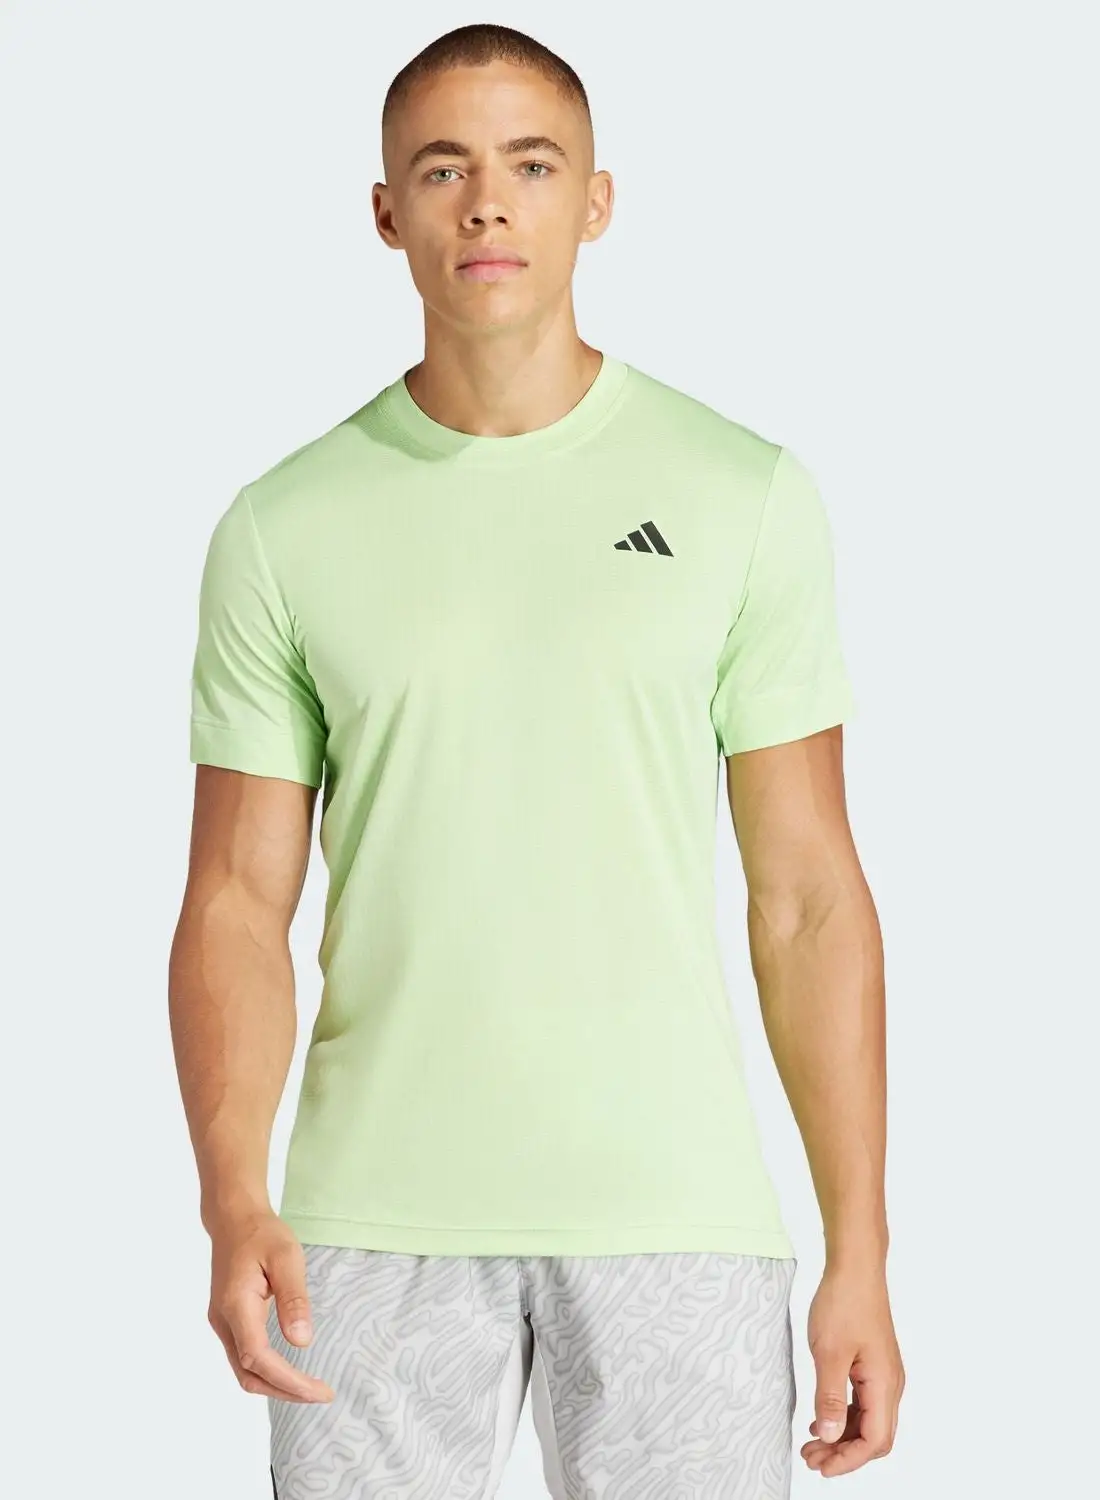 Adidas Tennis Freelift T-Shirt